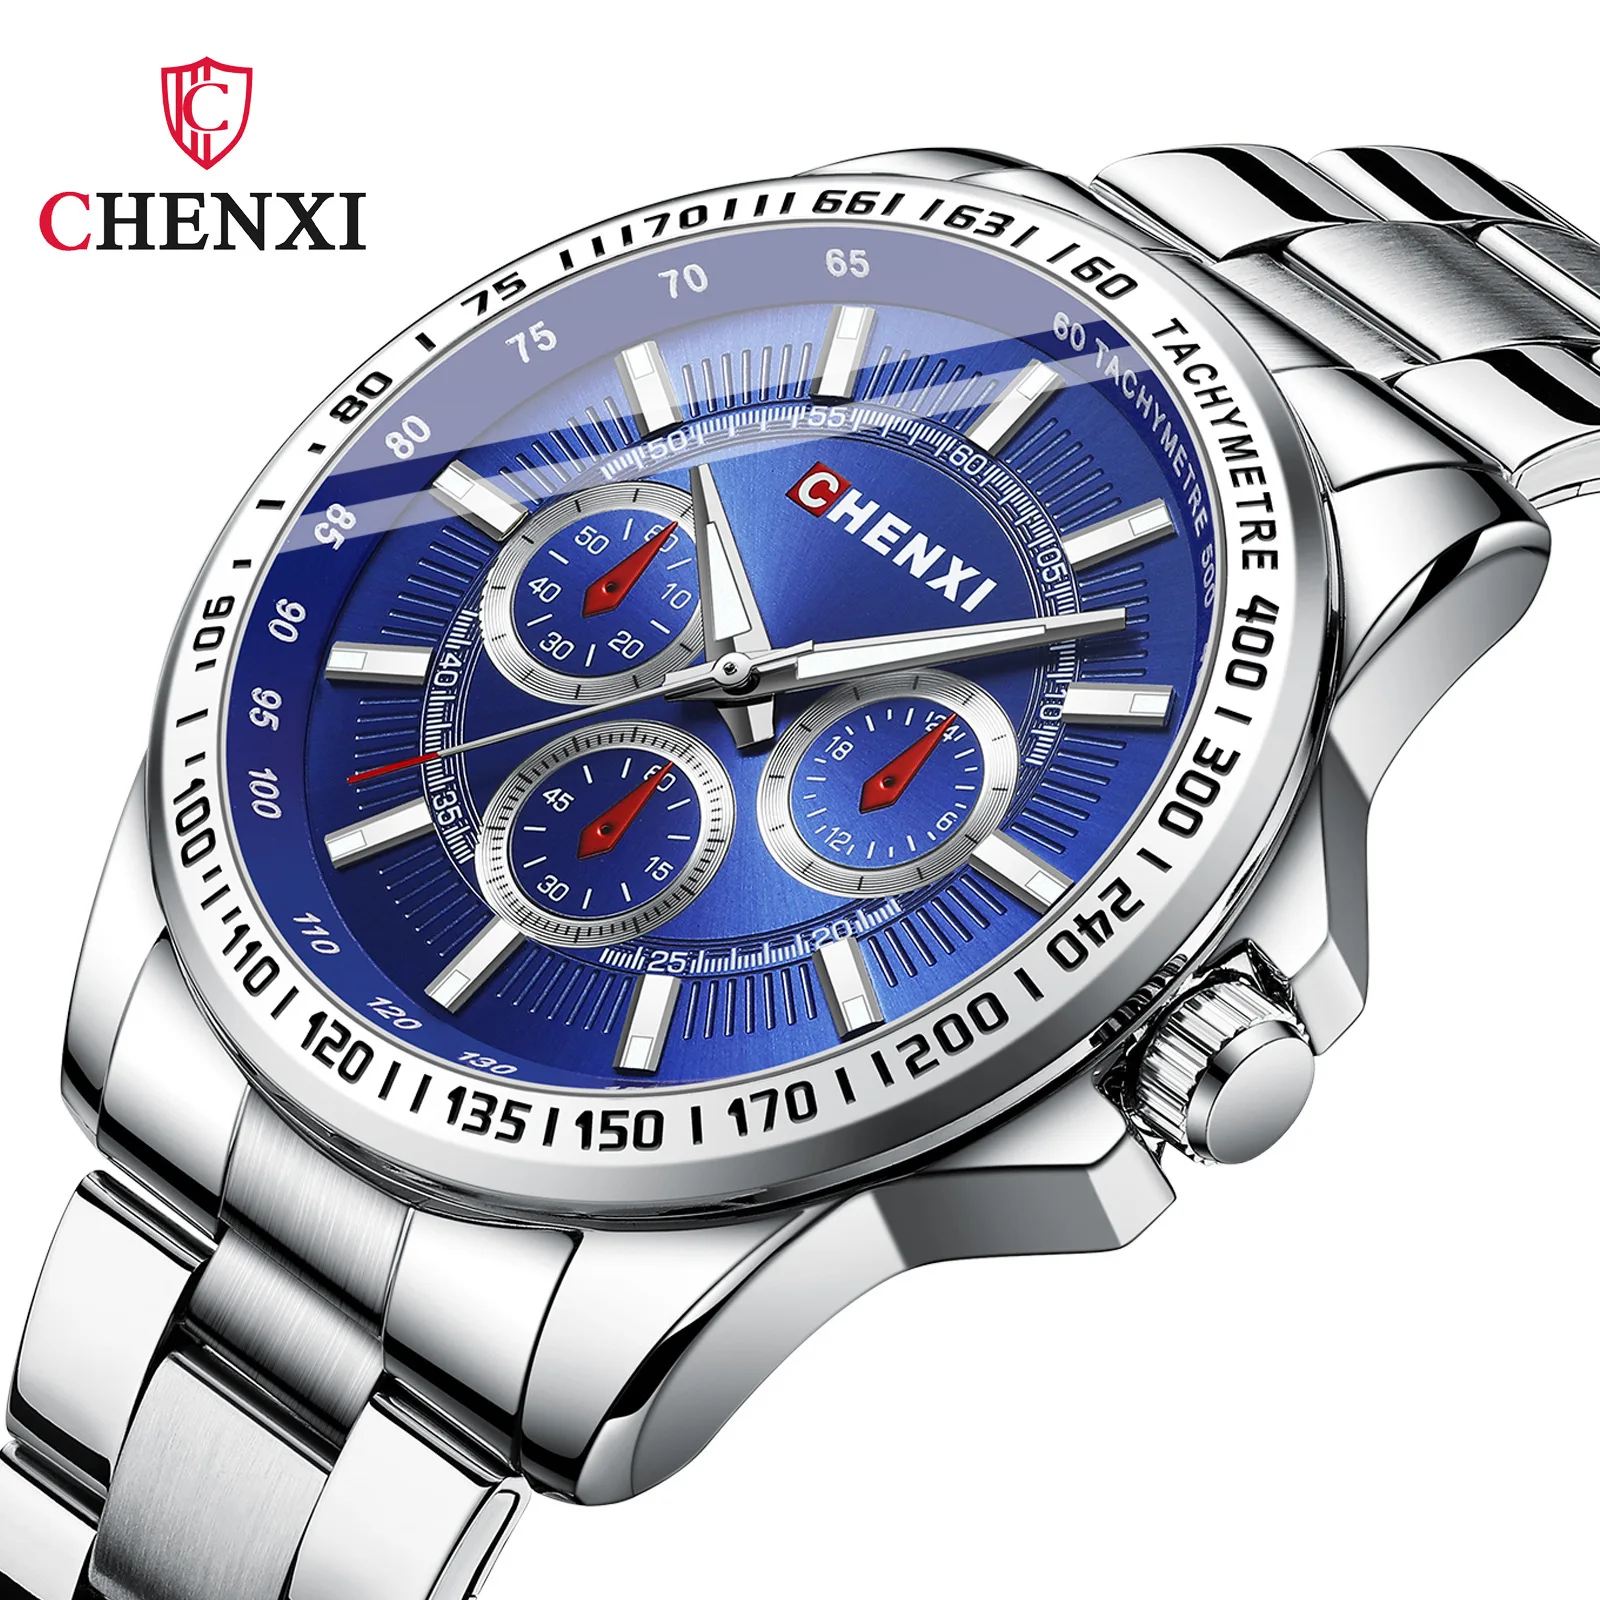 

CHENXI 014B Men's Quartz Watch Silvery Blue White Fashion Luxury Business Waterproof Wristwatch Stainless Steel Male Clock